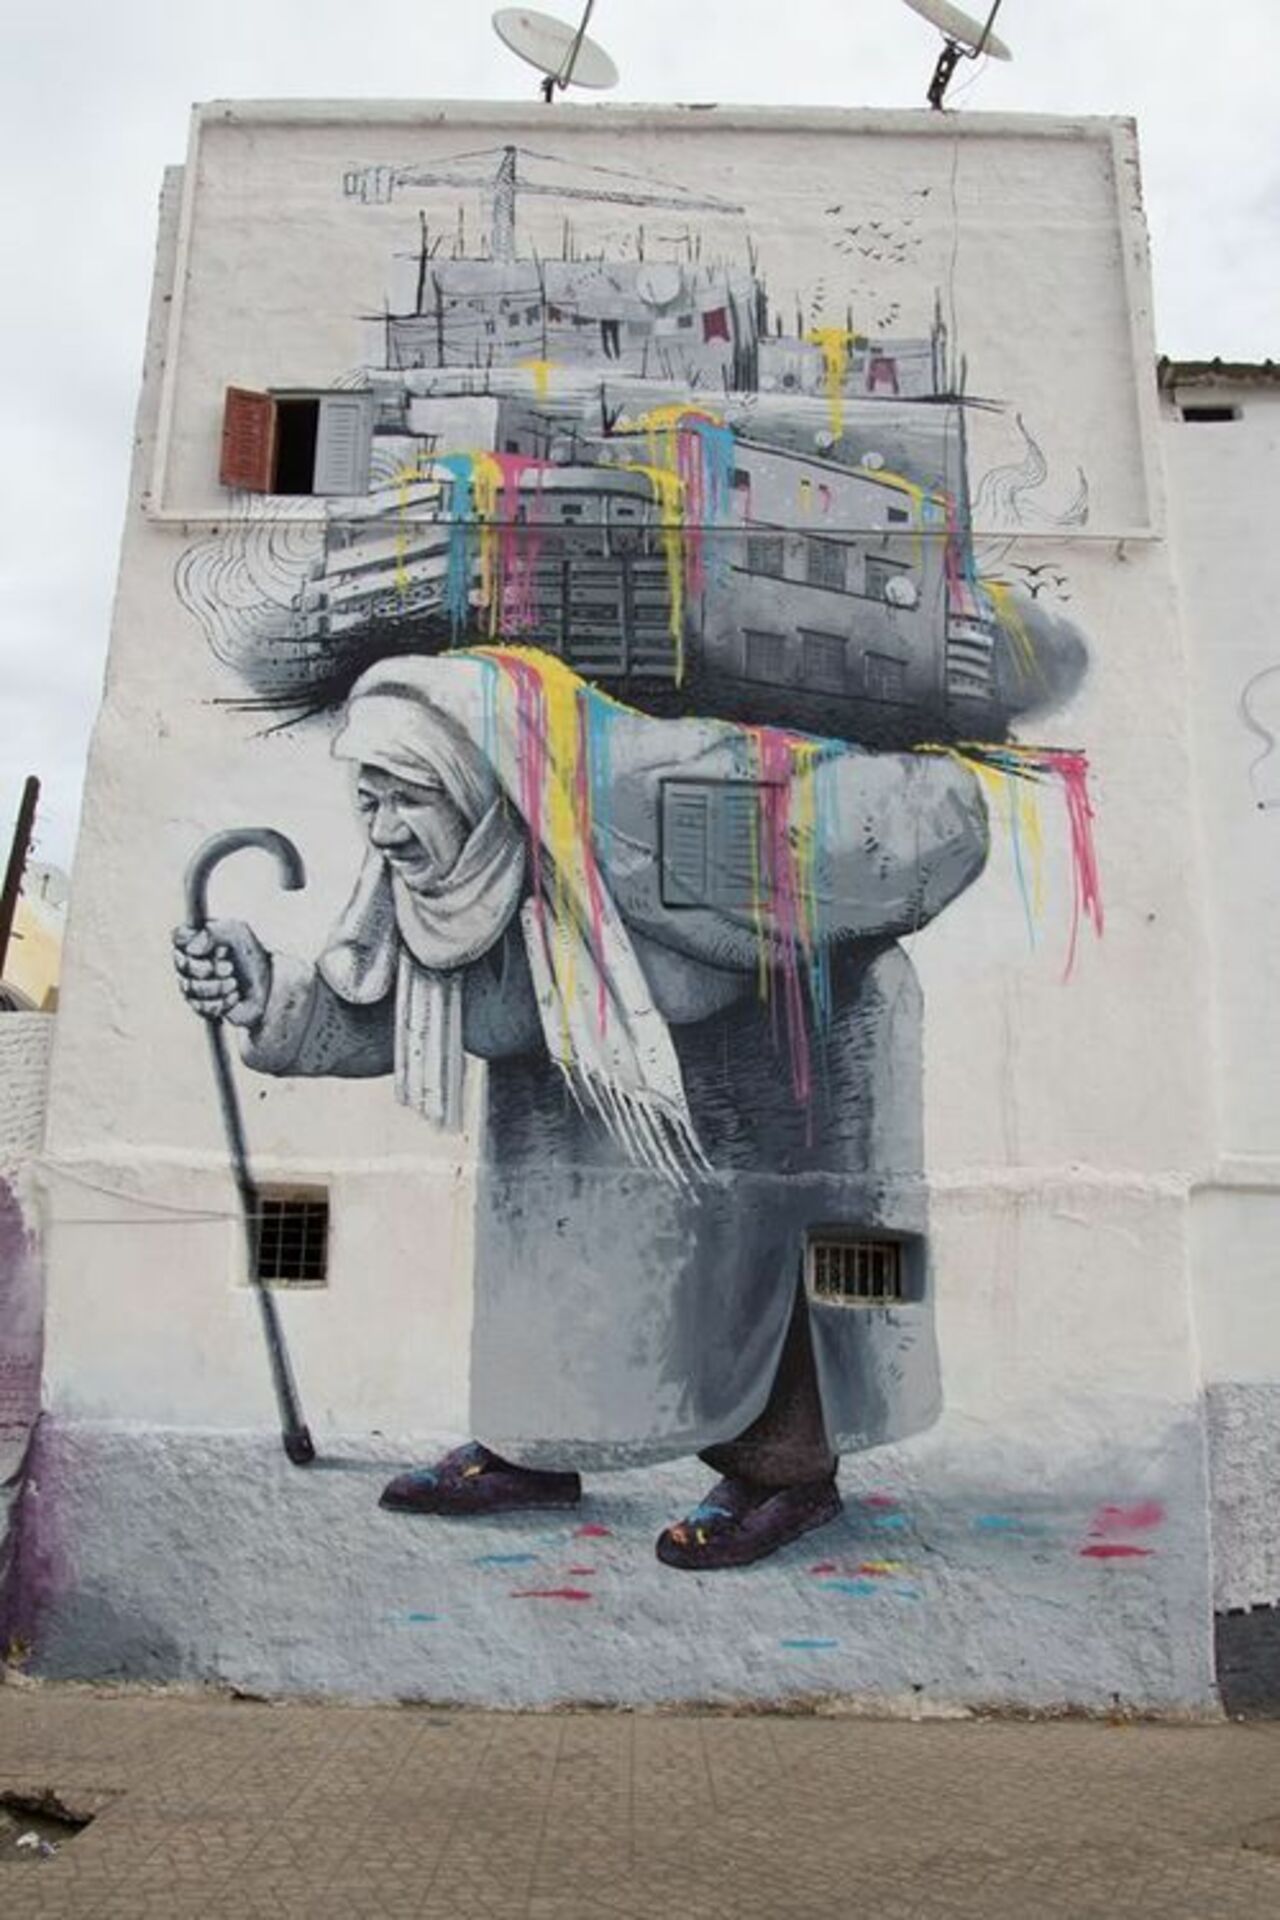 Unknown - Casablanca, Morocco#streetart #mural #art #graffiti https://t.co/2IEz5ipXis